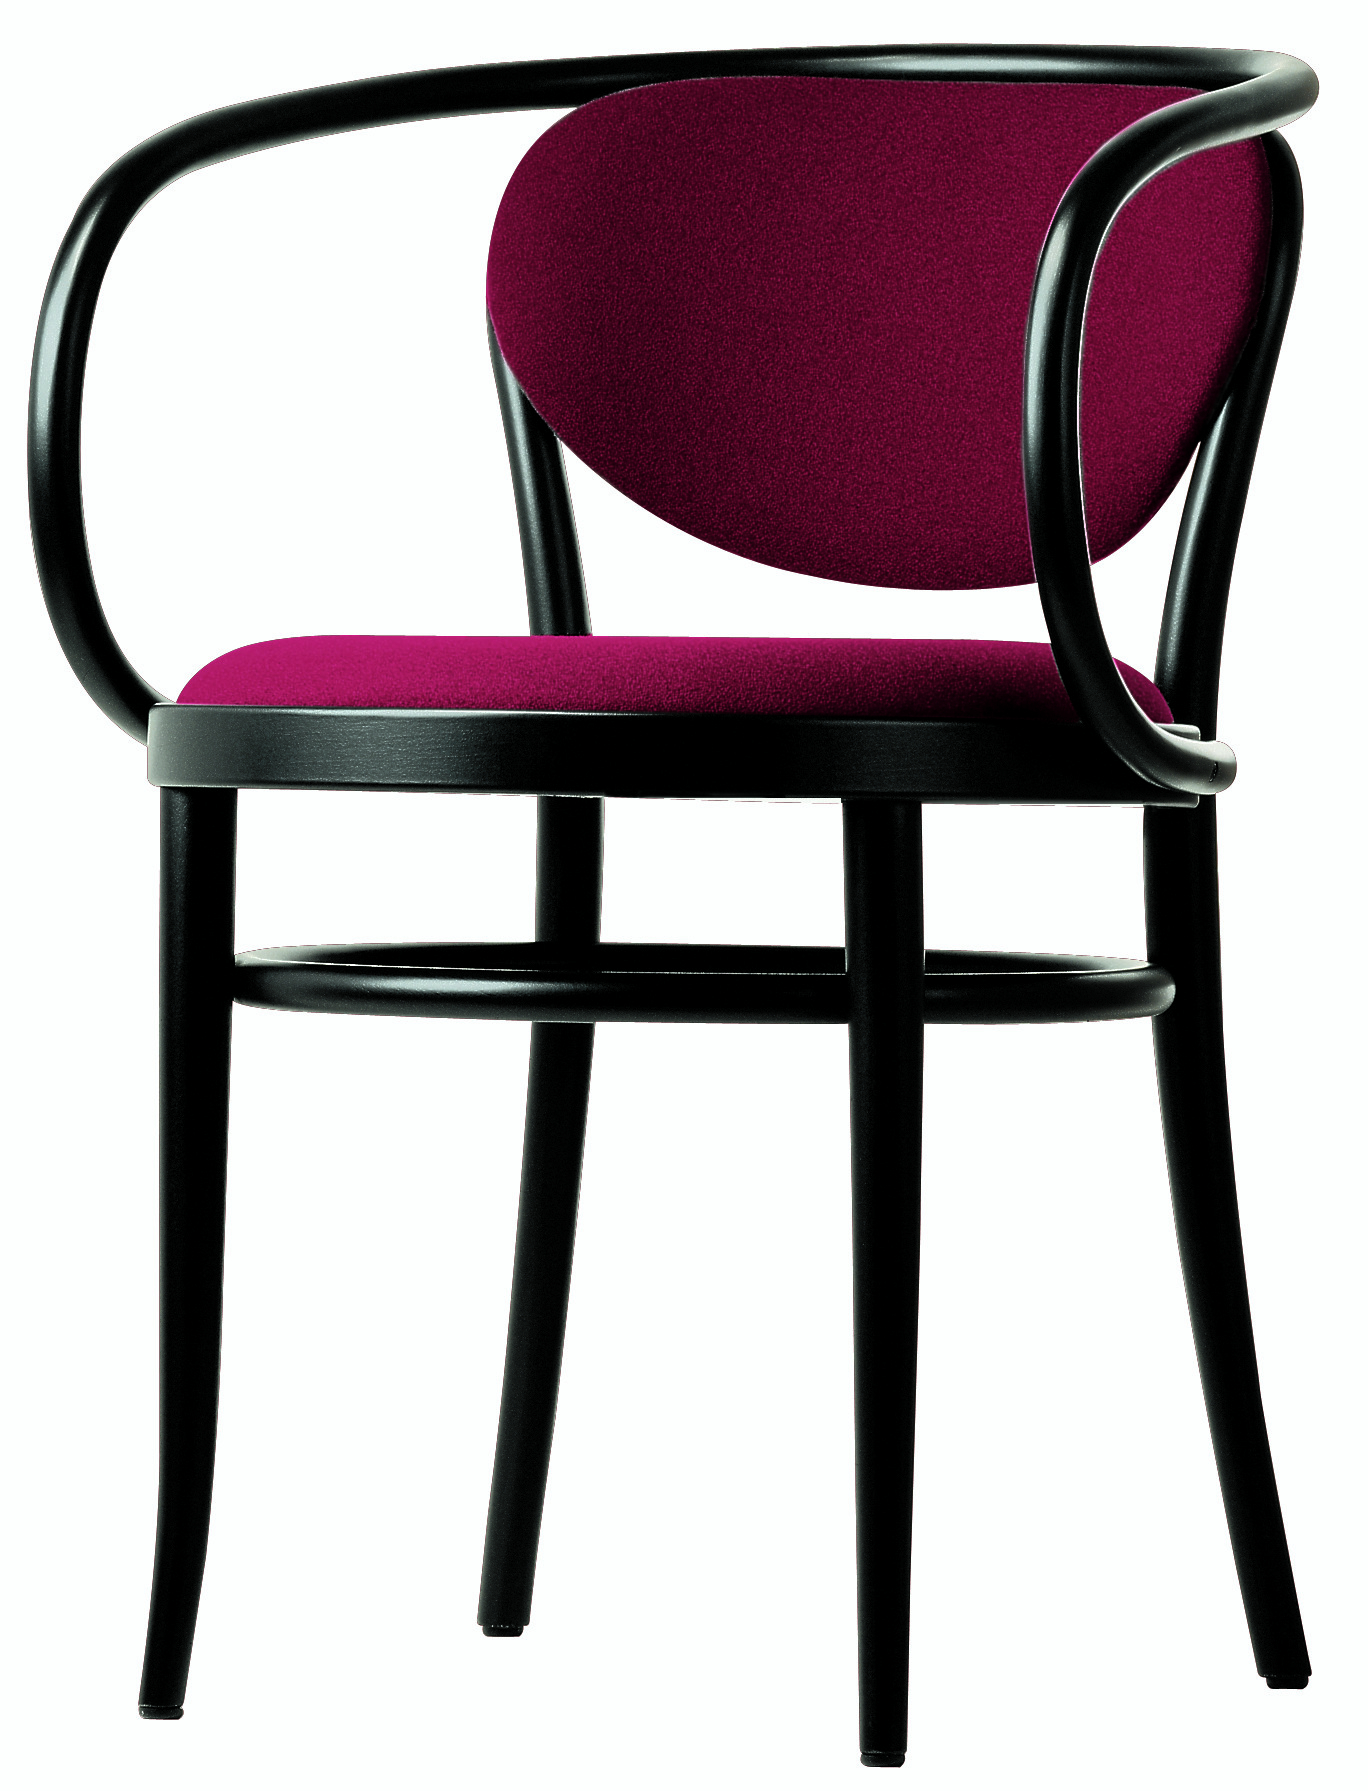 210 R / 210R Bentwood Chair Thonet